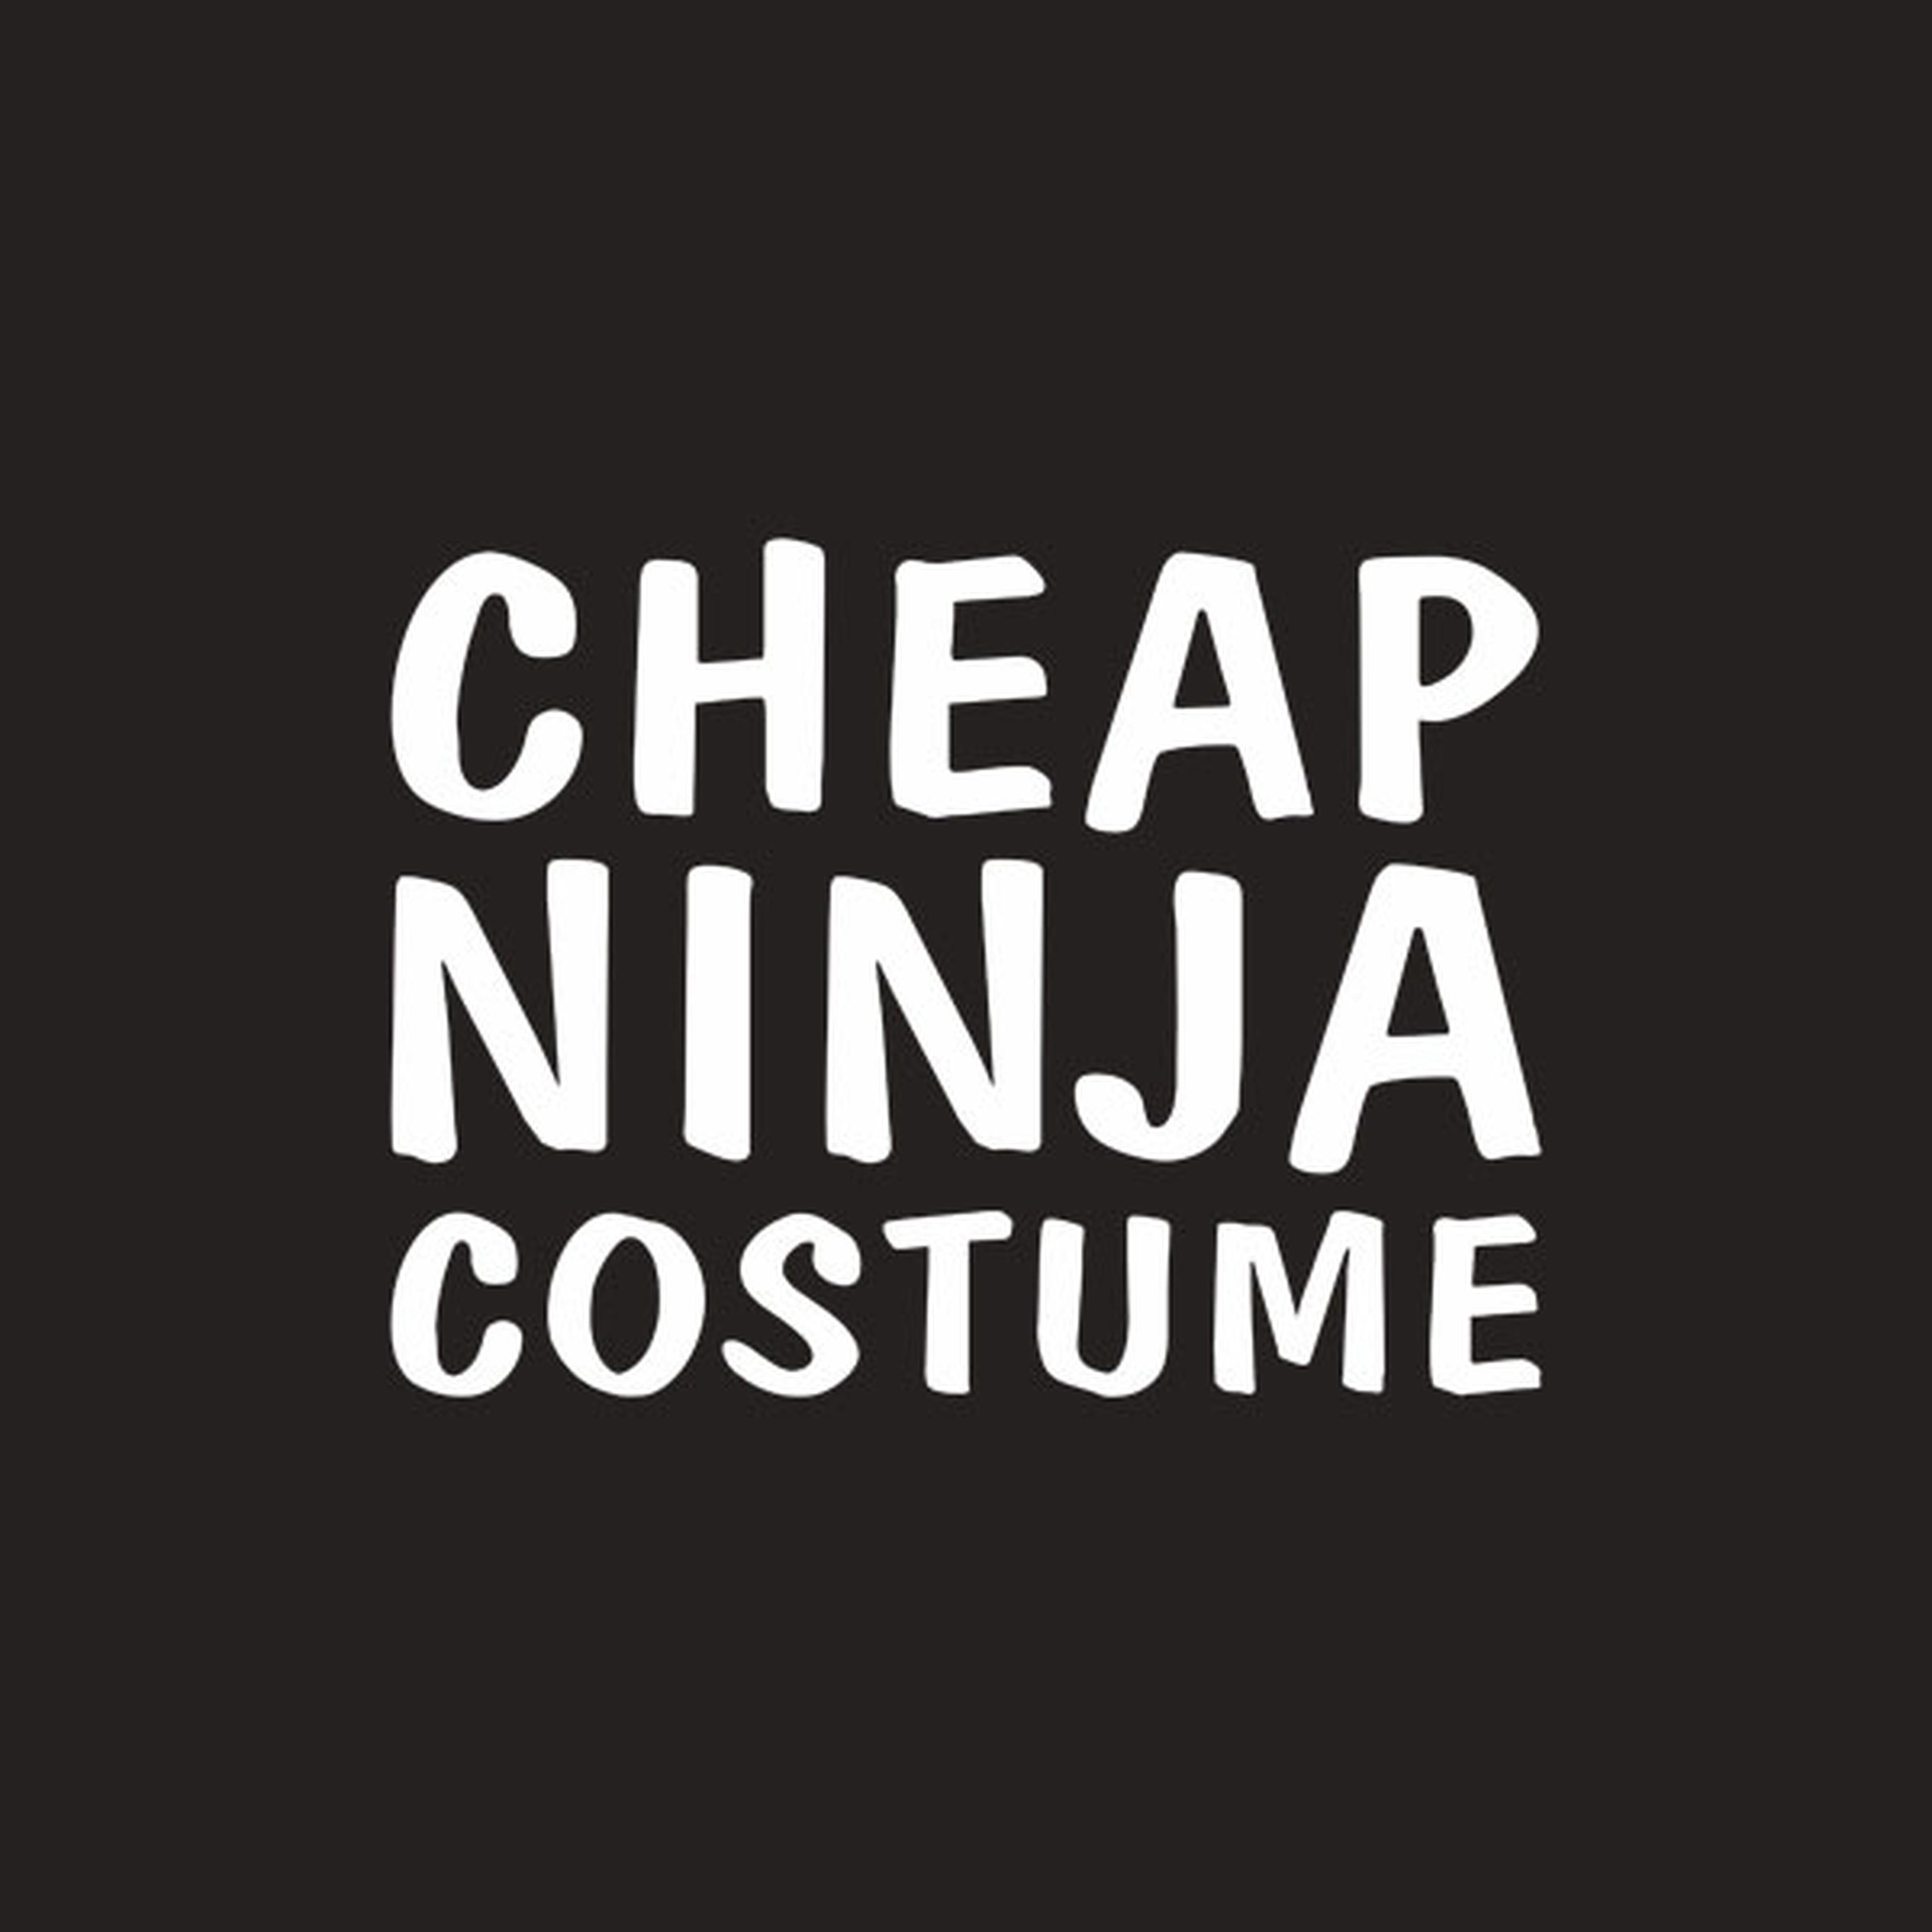 Cheap ninja costume - T-shirt